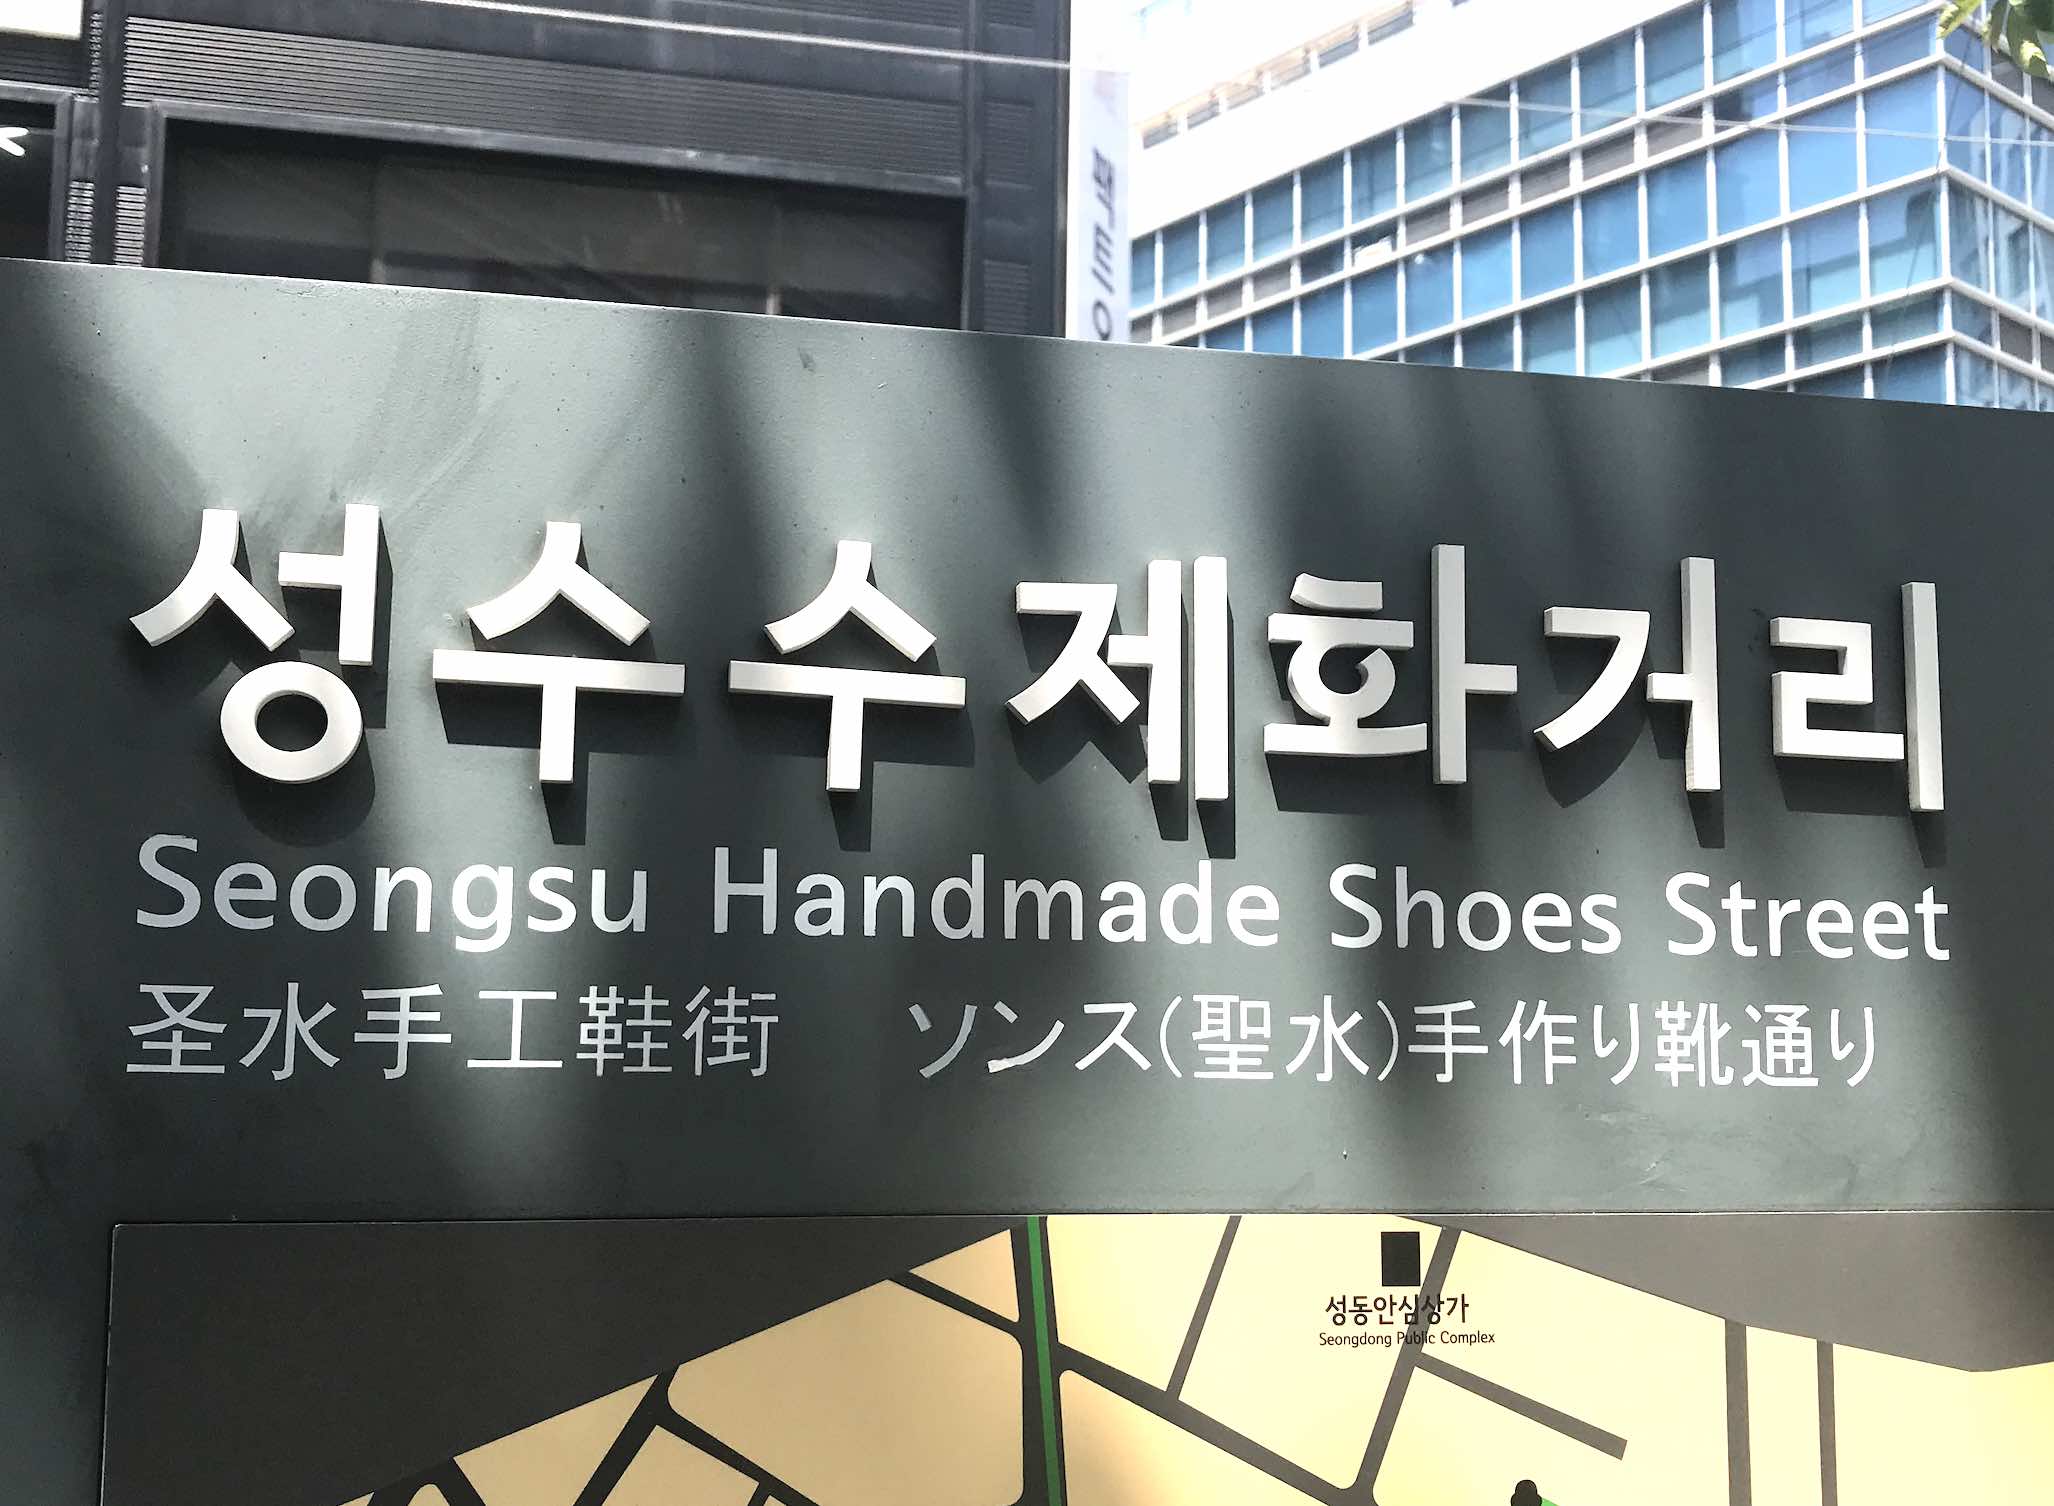 handmade shoes in Korean is 수제화